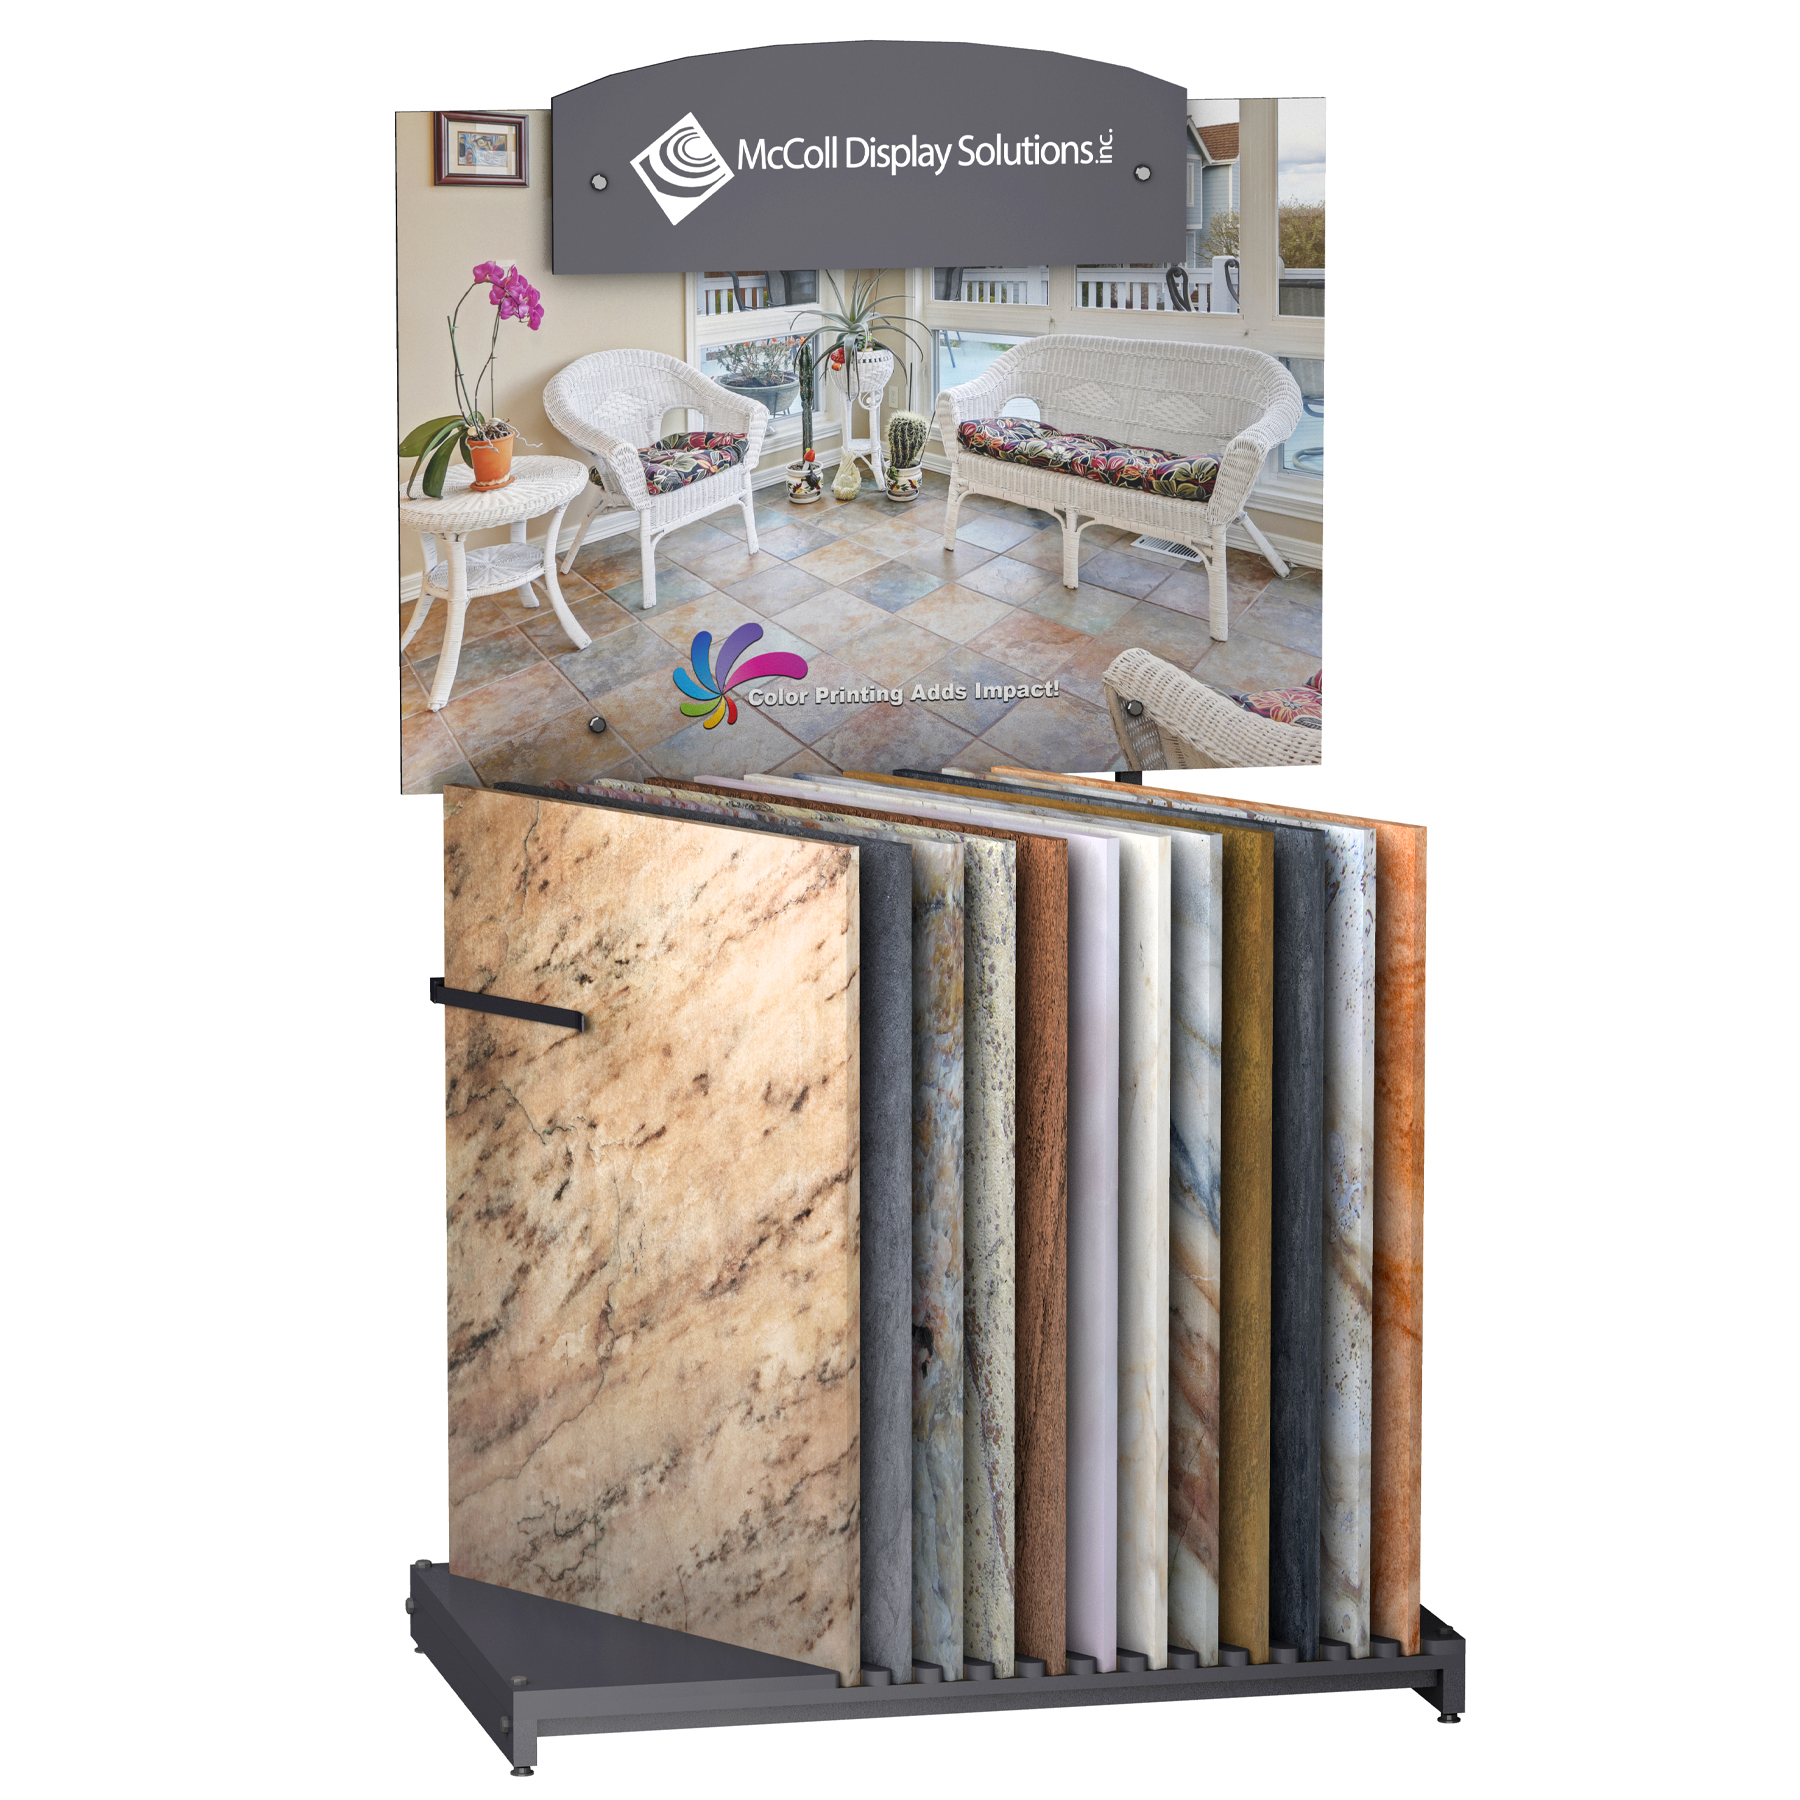 CD101 Slotted Floor Stand with Signage Displays Ceramic Tiles Marble Stone Quartz Travertine Flooring Samples